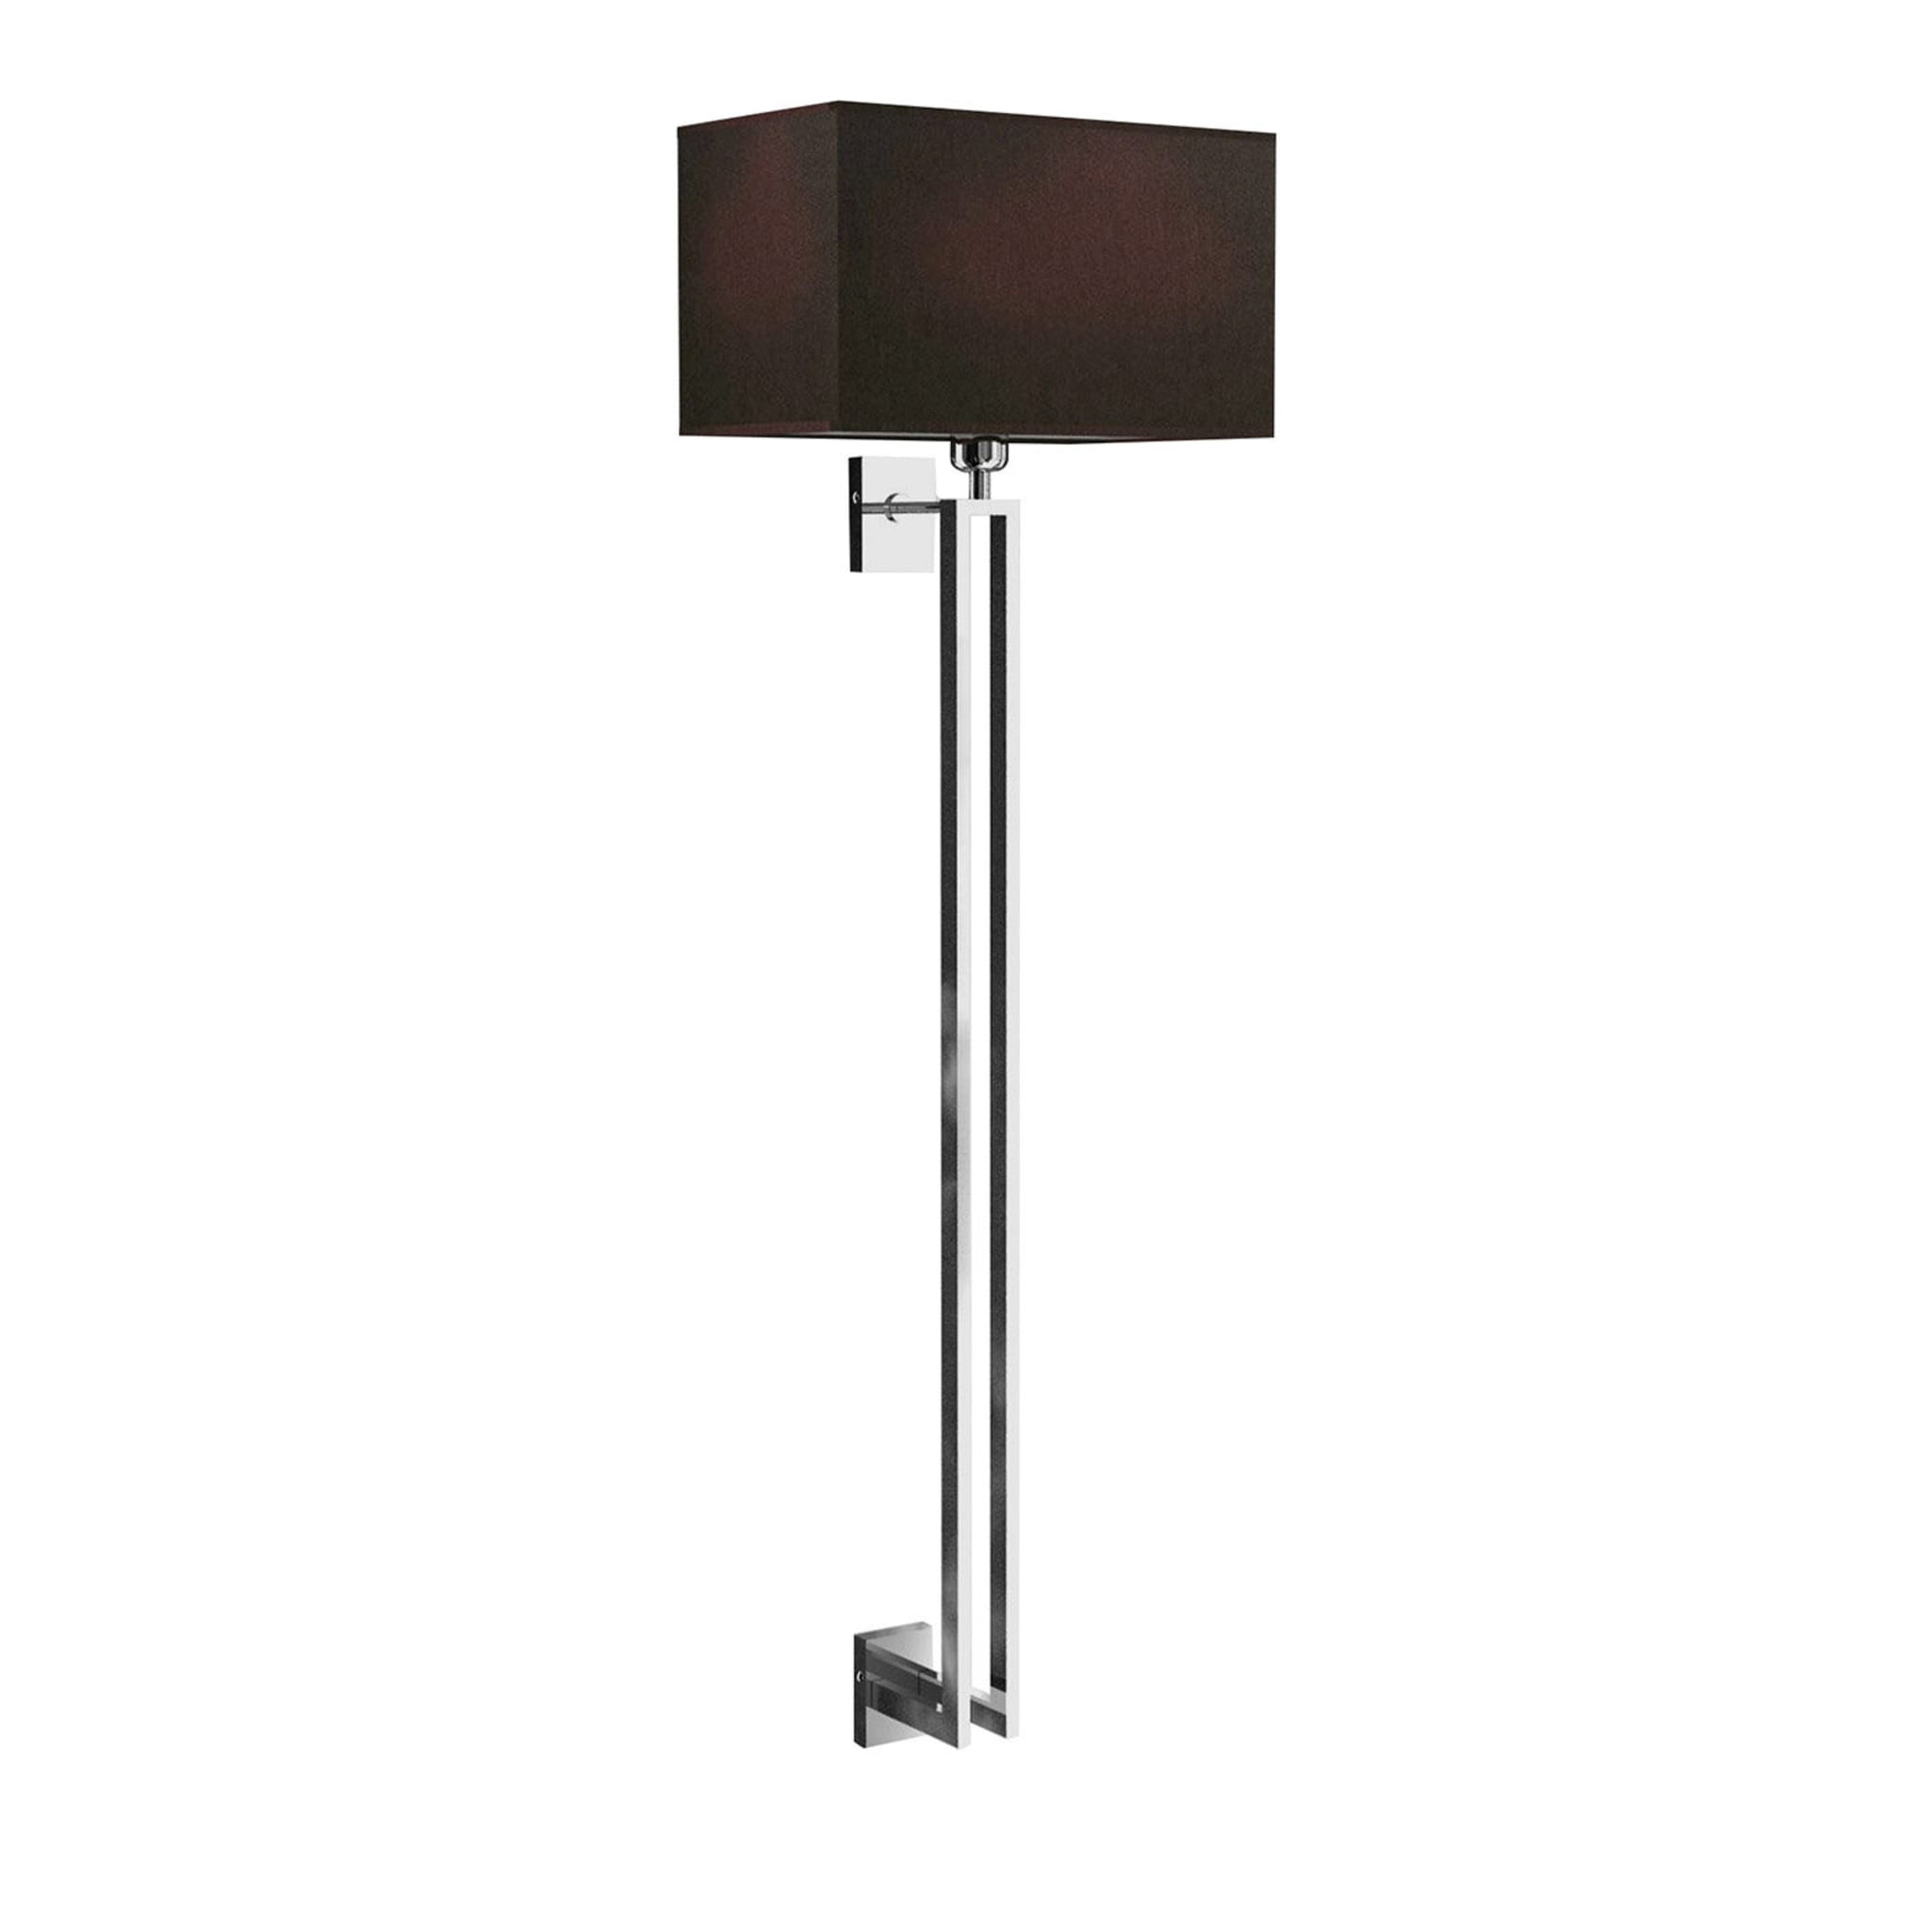 Cobalto Tall Chromed Wall Lamp with Black Shade - Main view